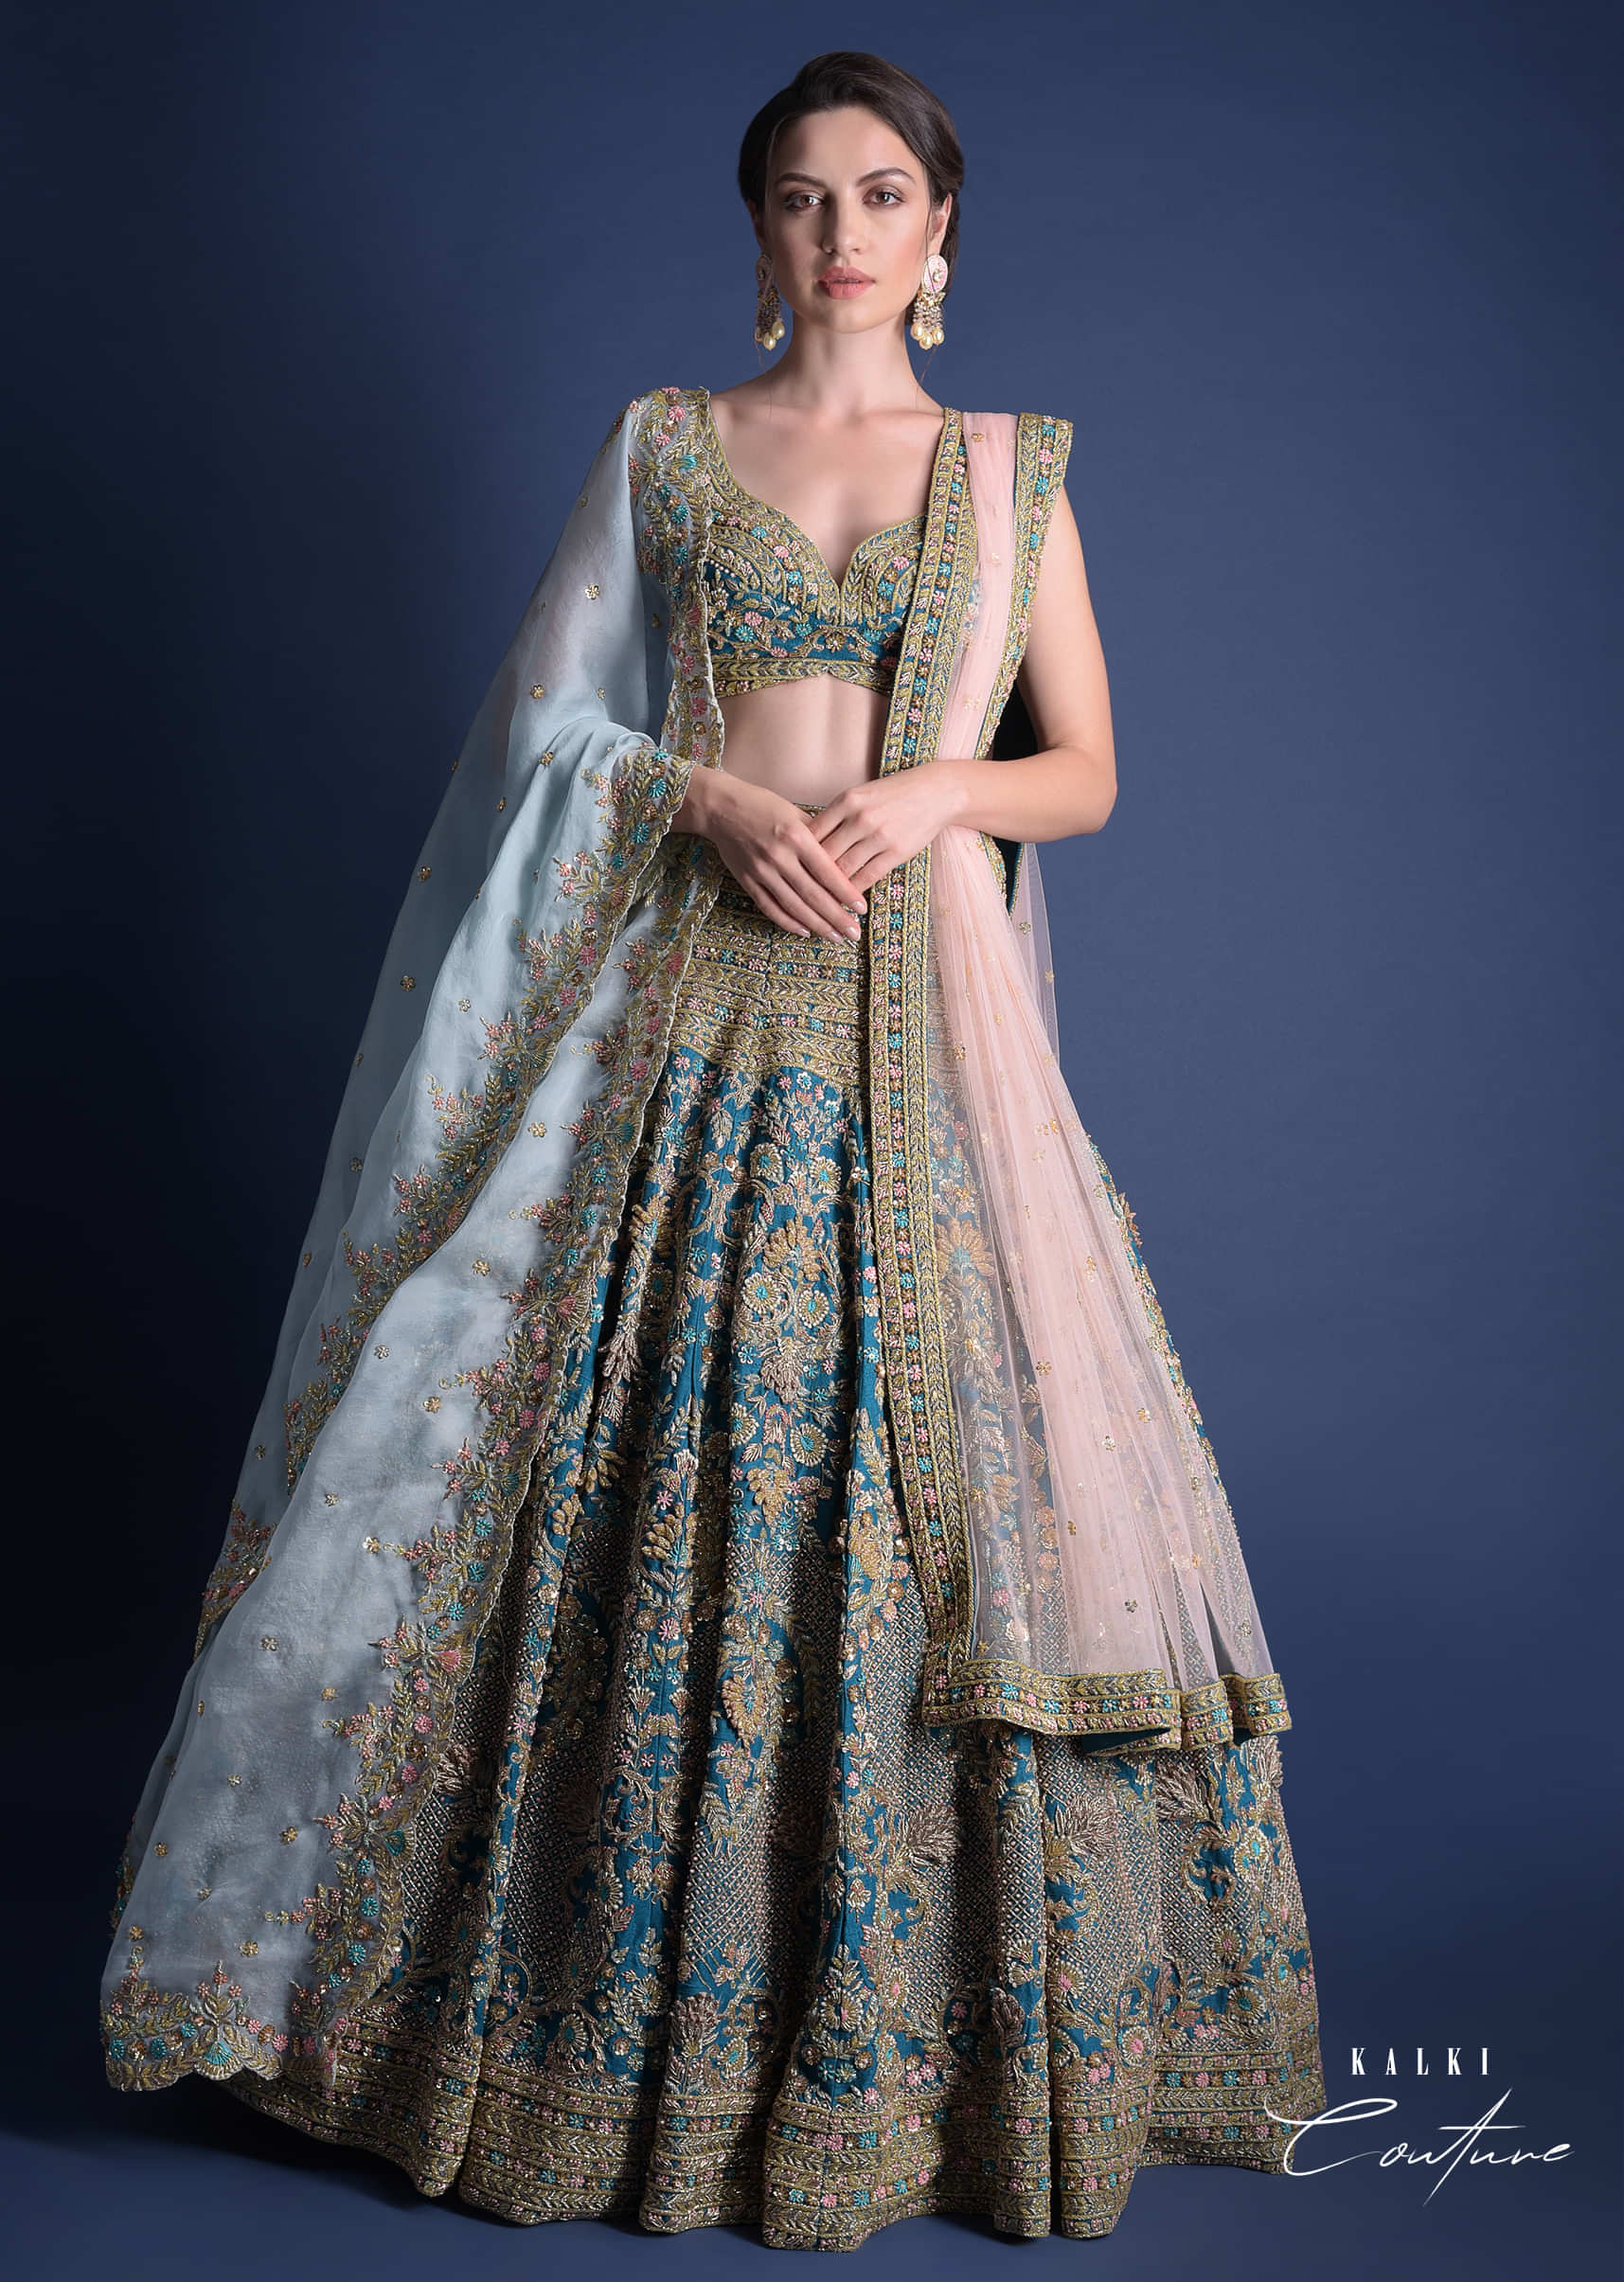 Pakistani Designer Zardosi Work Bridal Lehenga Online 2021 – Nameera by  Farooq